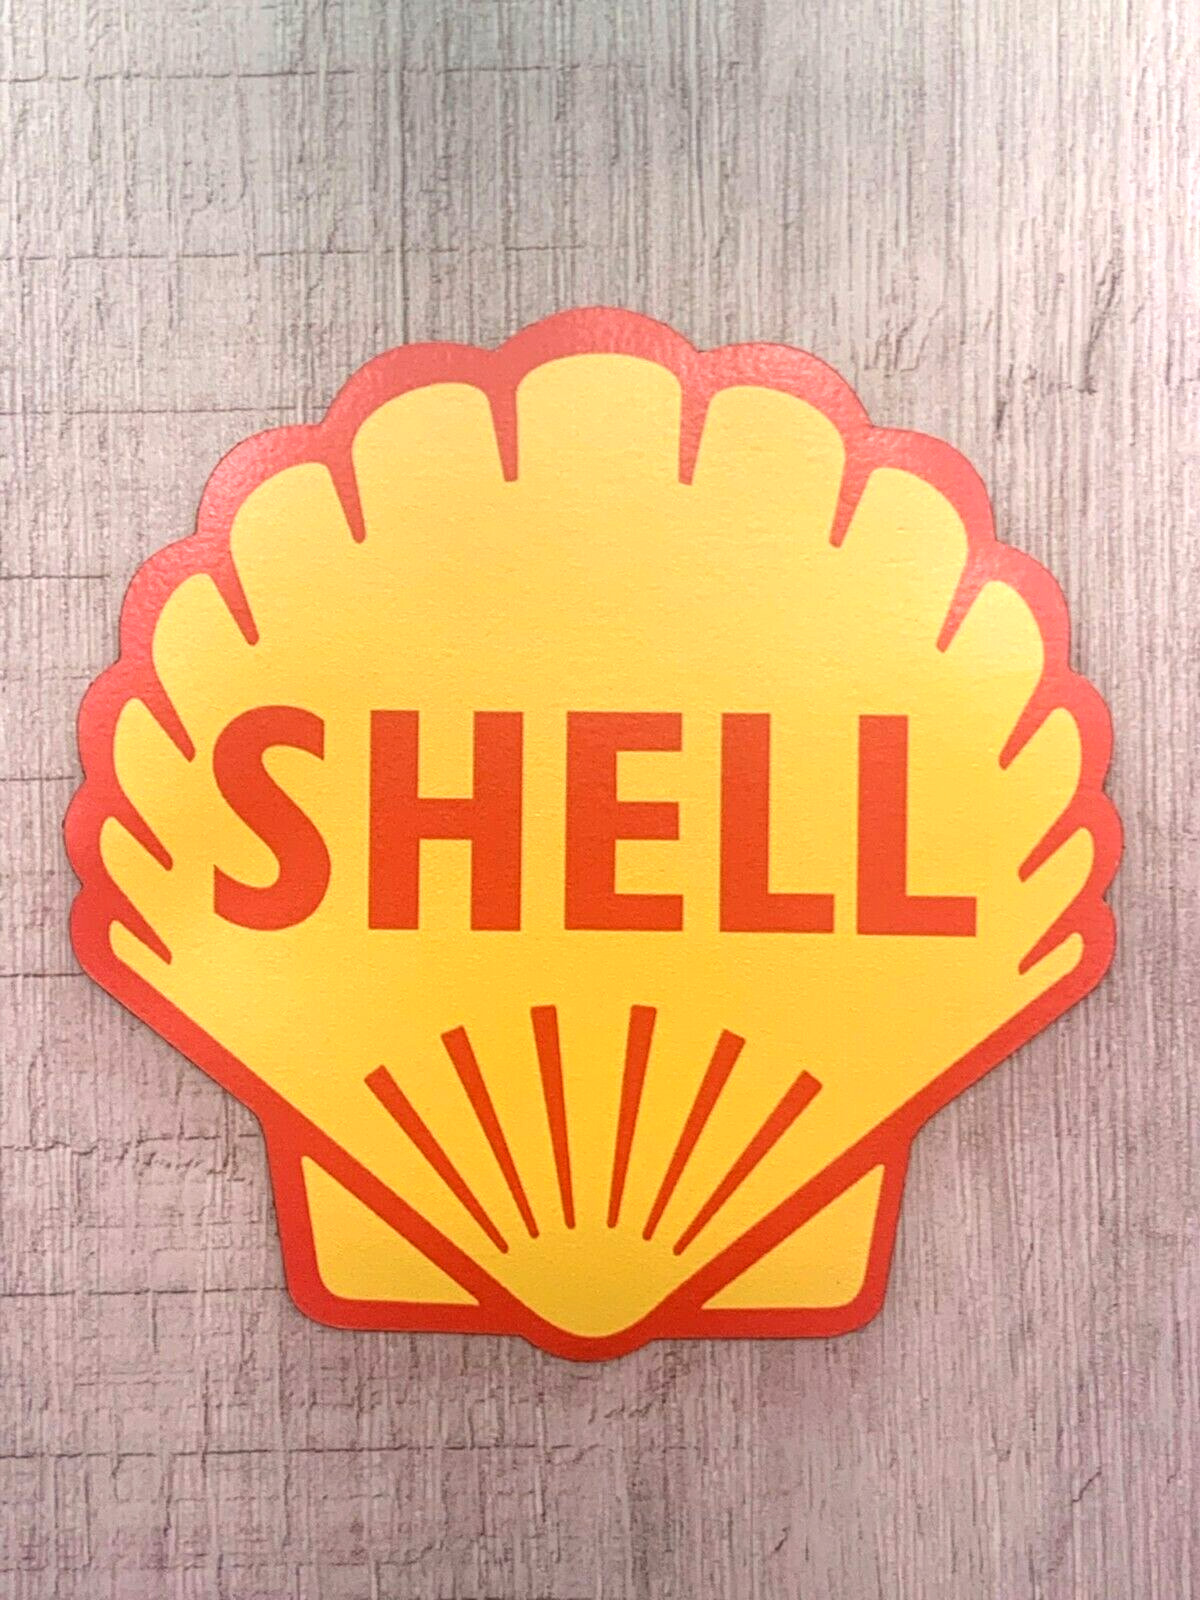 Vintage Shell Gasoline Logo Magnet Gas Oil Service Station Auto